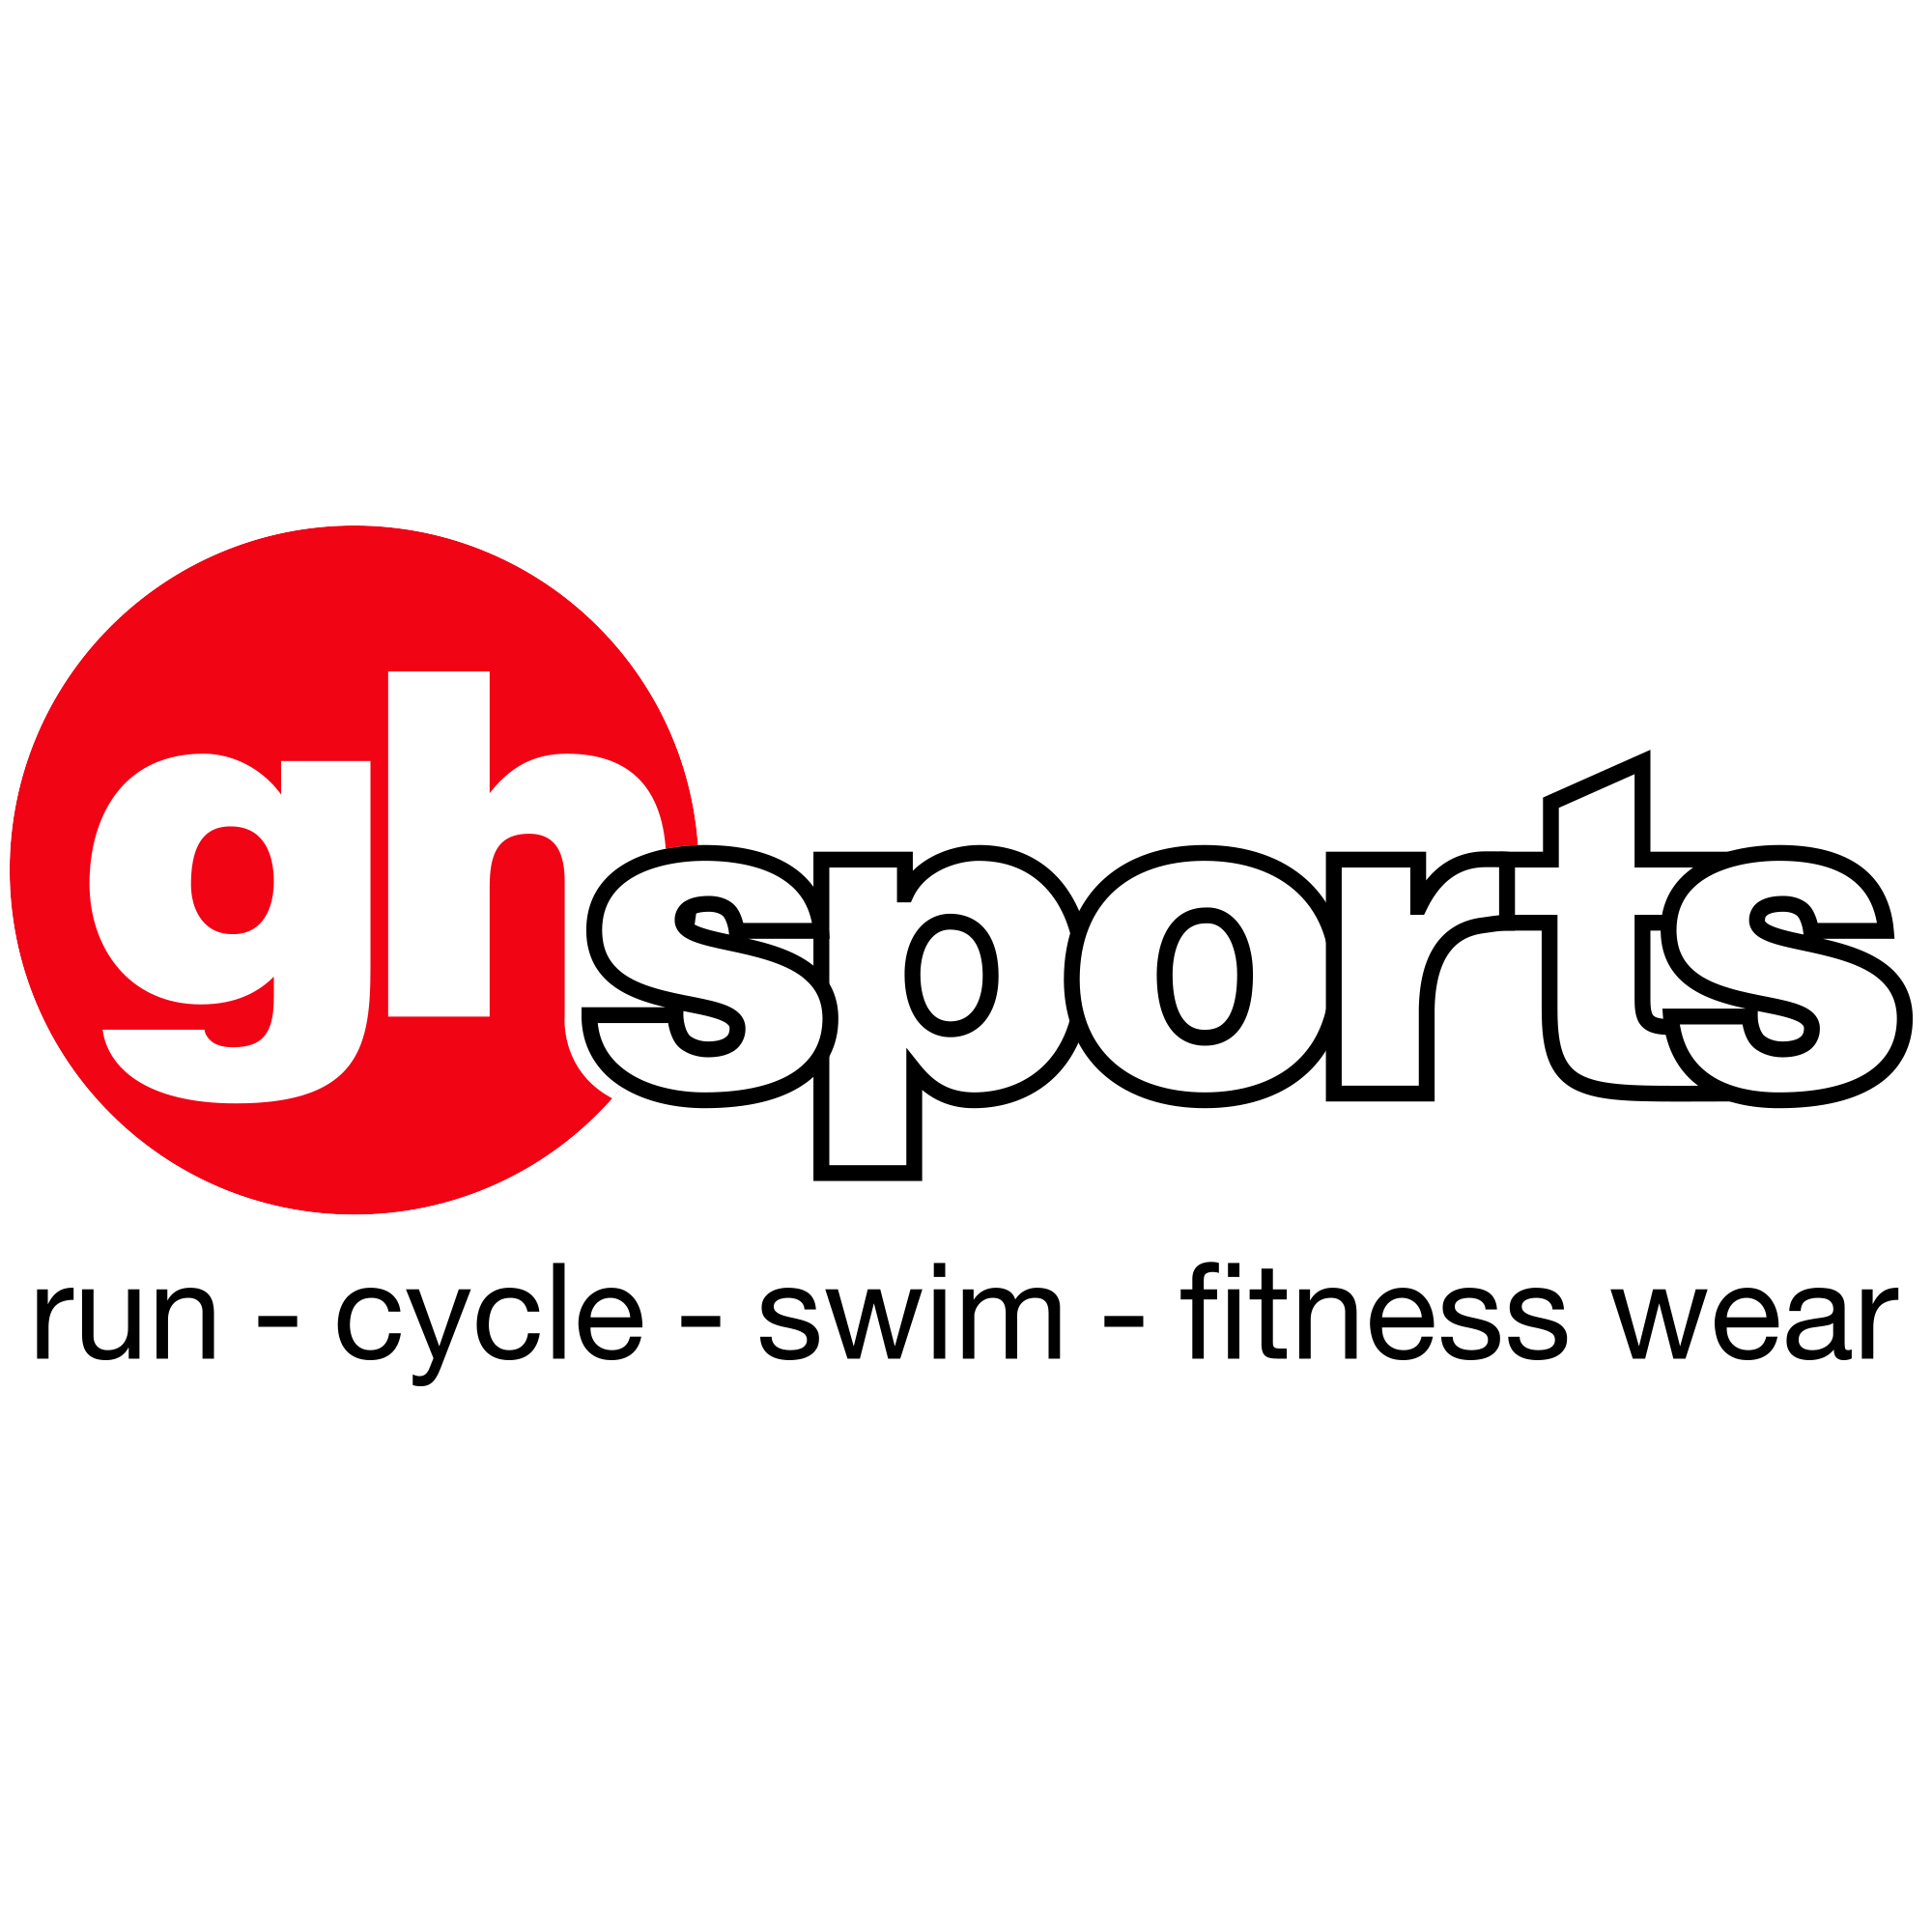 ghsports logo